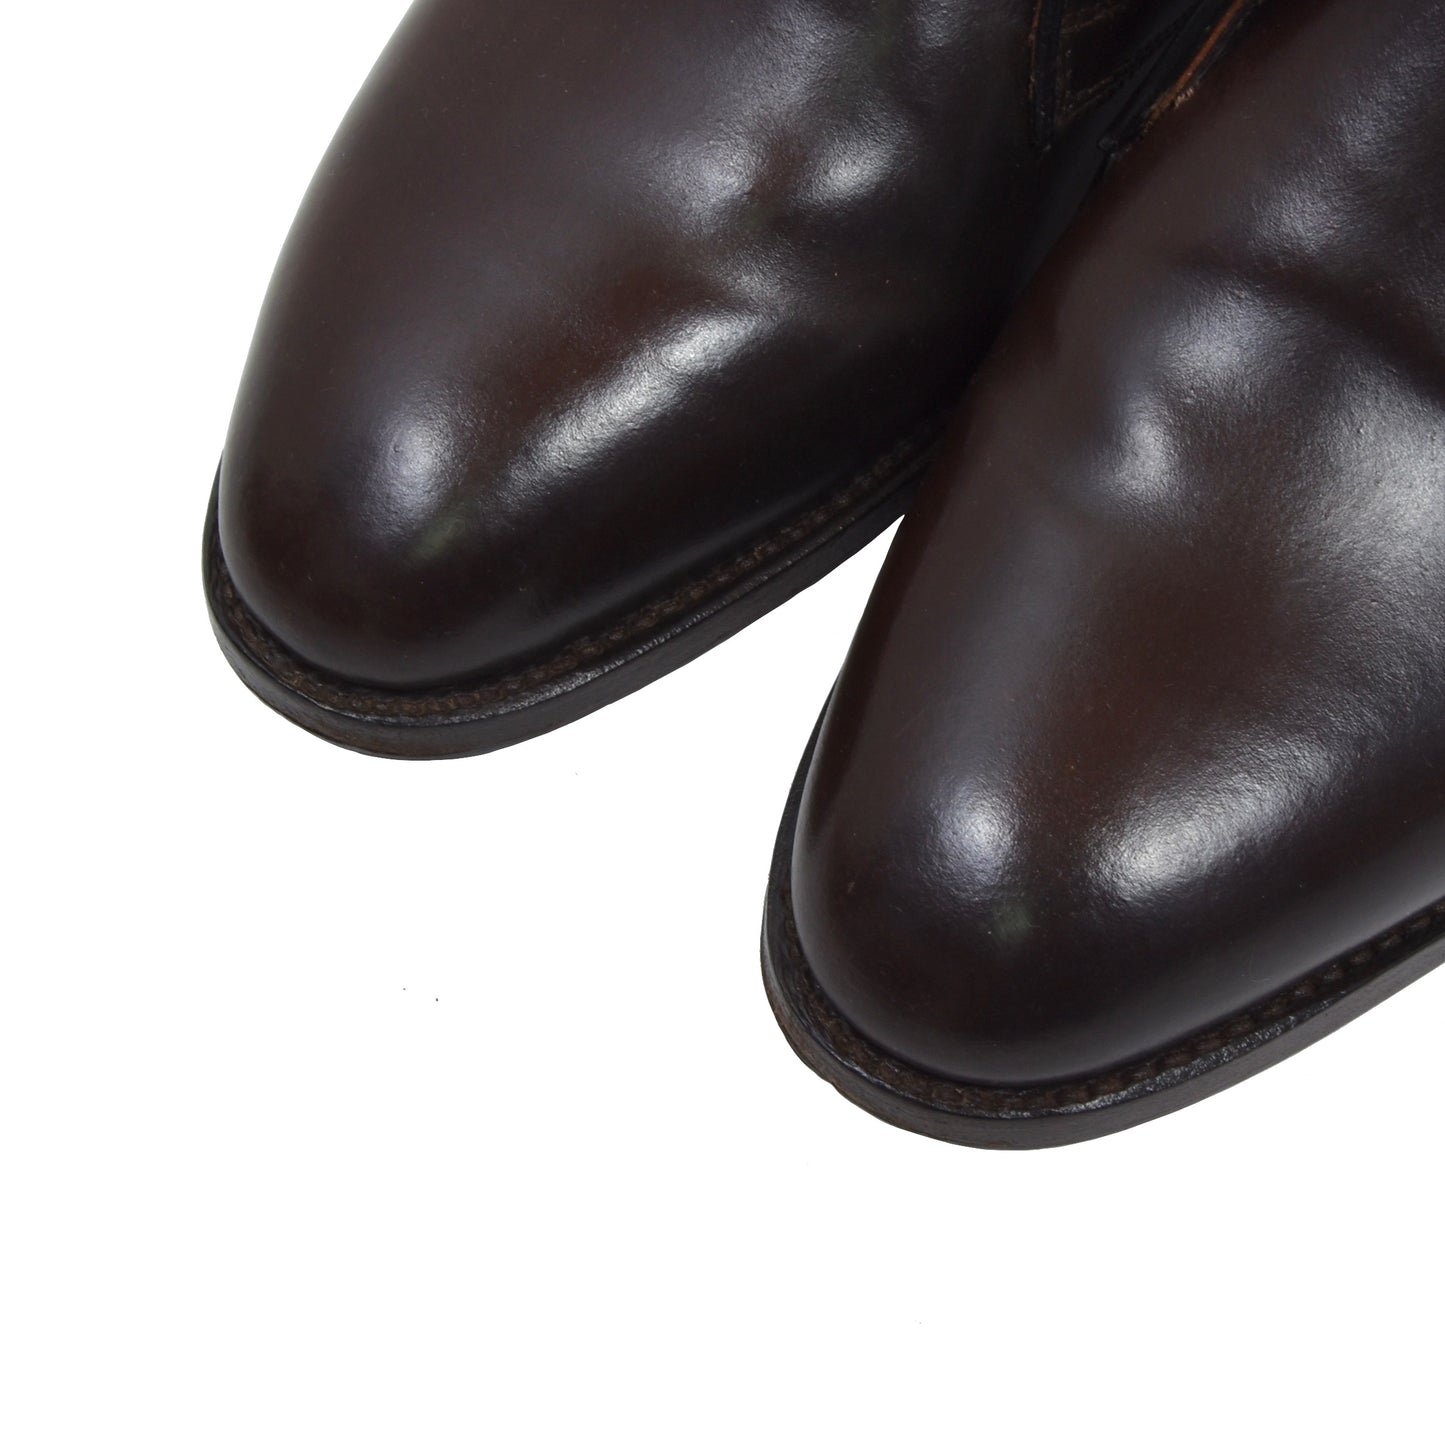 Ludwig Reiter Shell Cordovan Chukka Boots Size 7.5 - Dark Brown